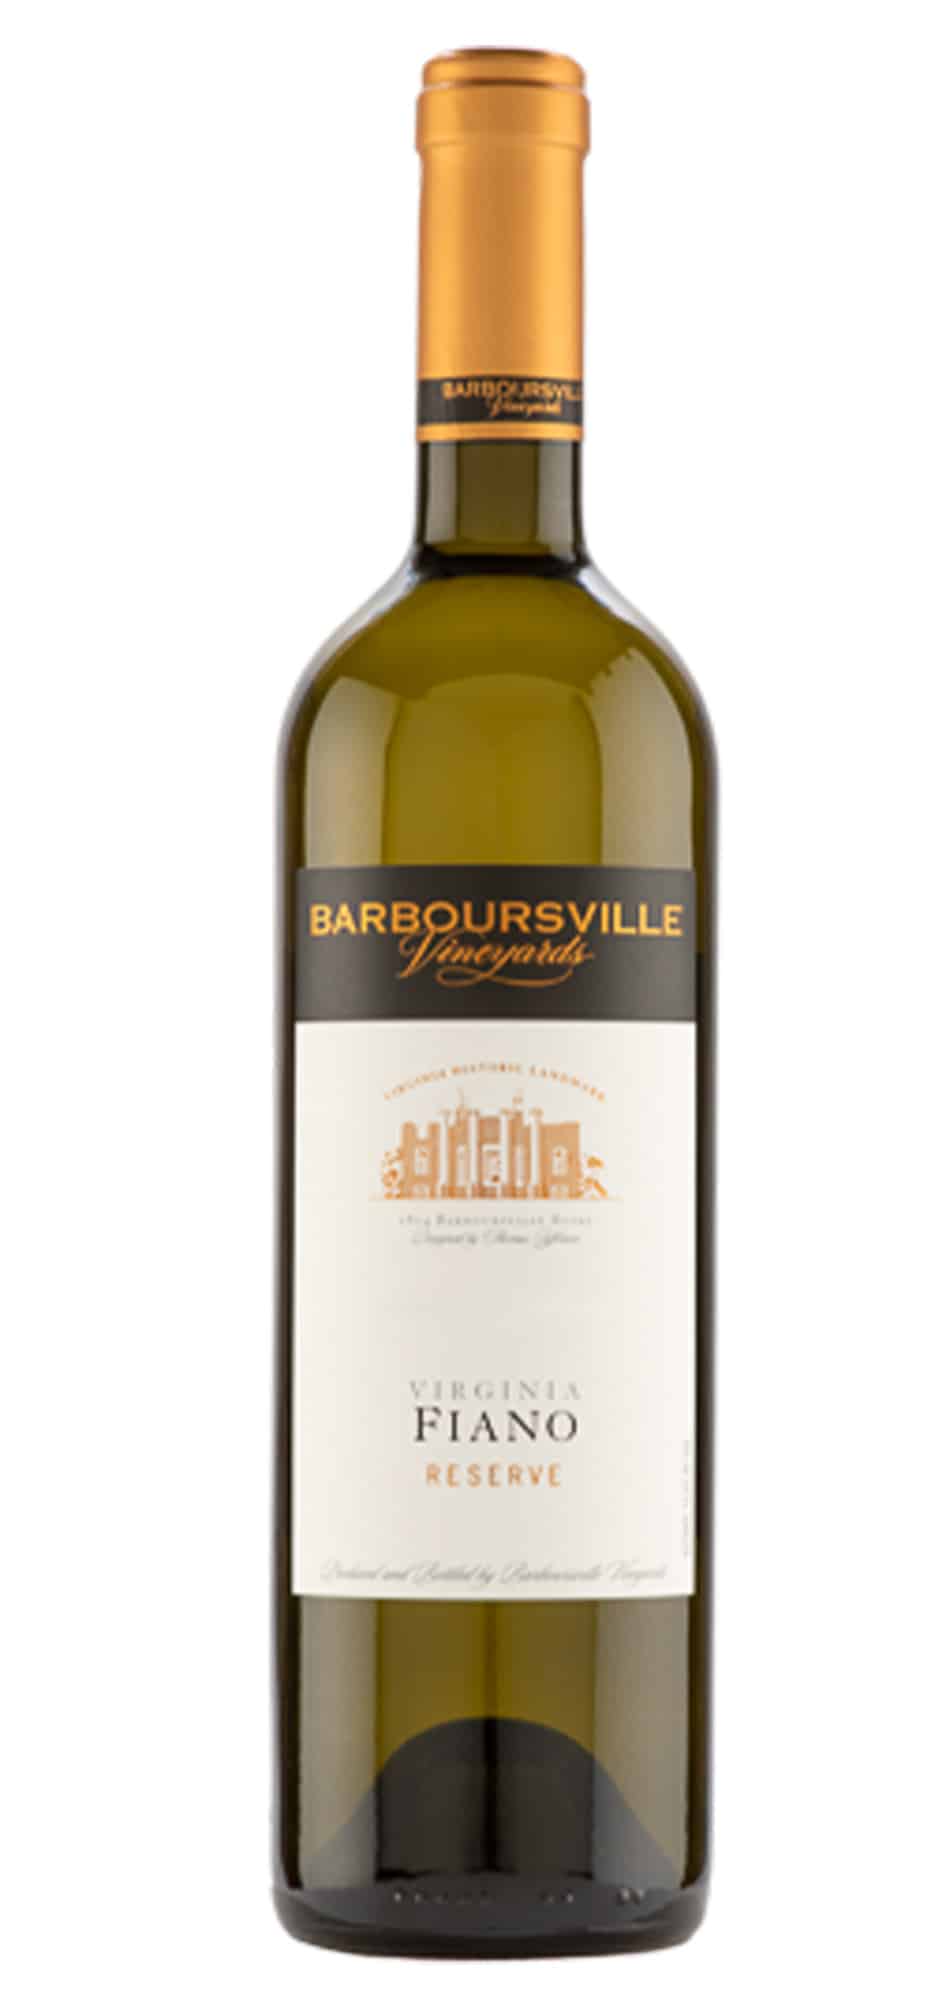 Barboursville Vineyards award-winning wine, Fiano Reserve bottle